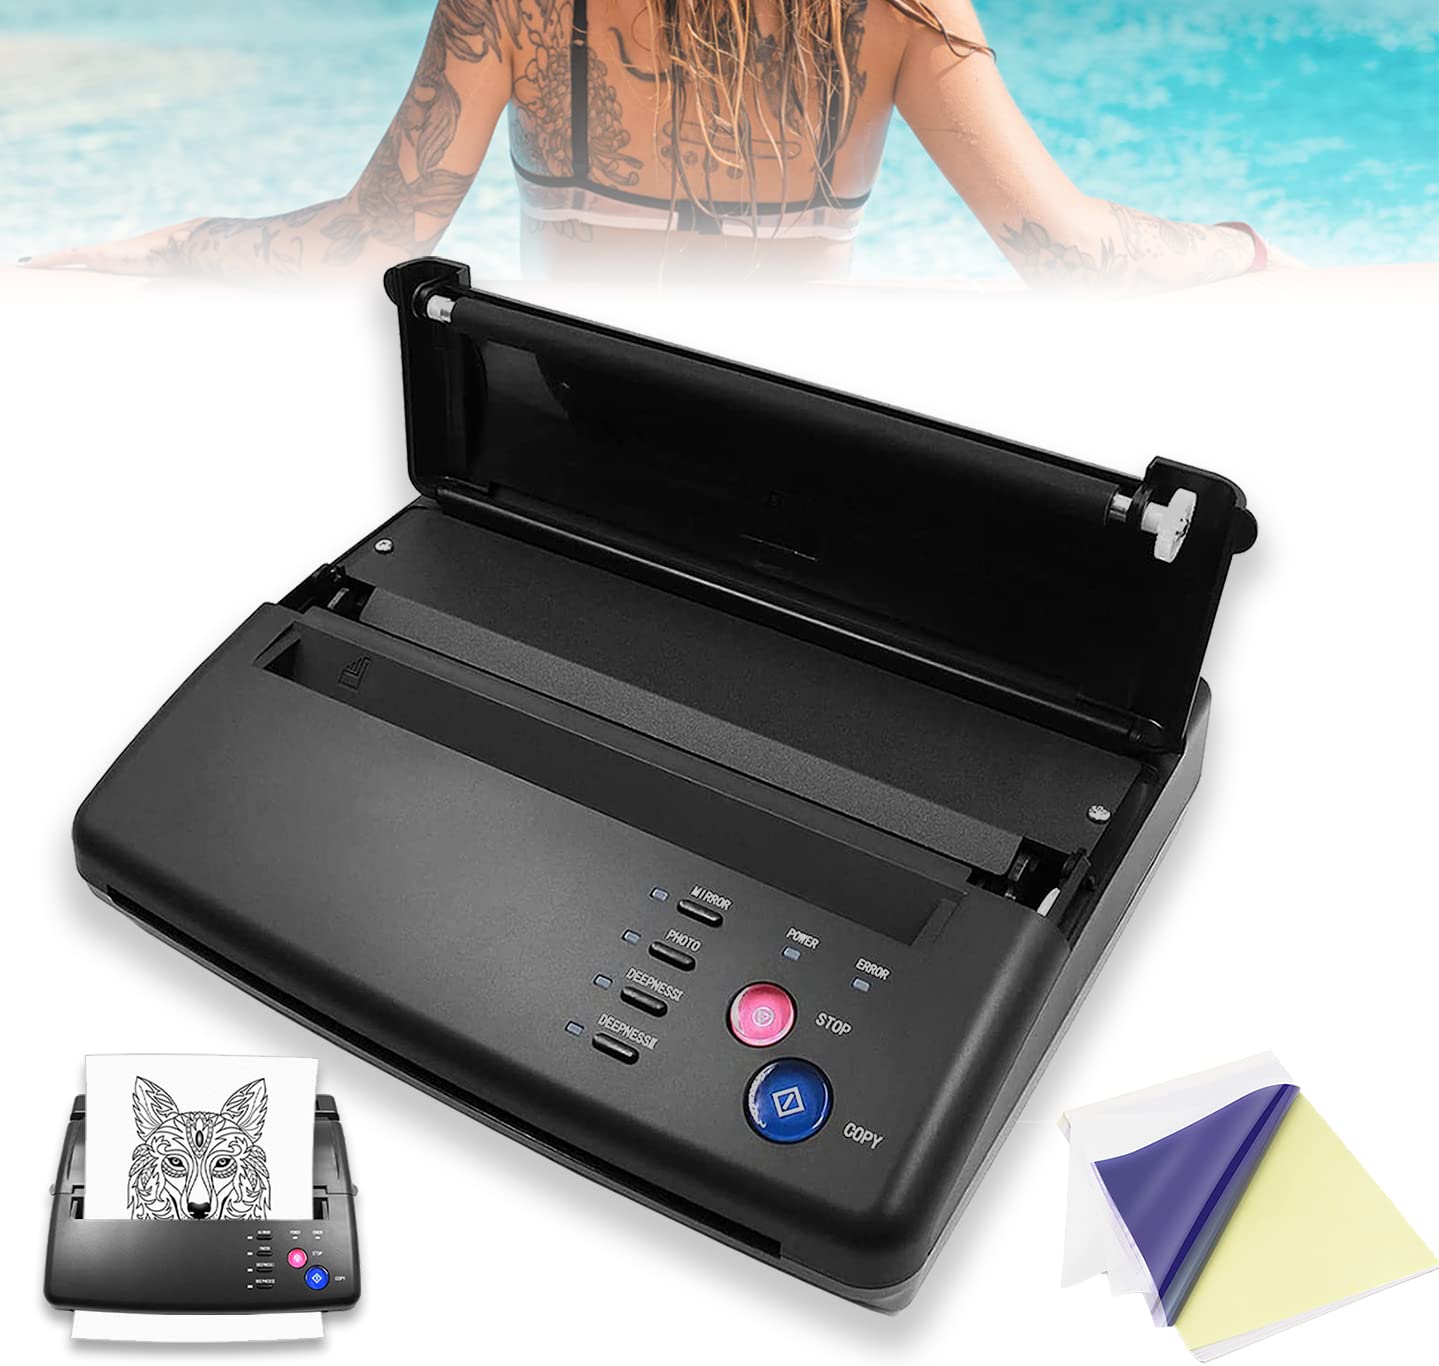 Amazon's Choice 26% off $154.39 Ponek Tattoo Stencil Printer, M08F-A4  Portable Tattoo Printer, Wireless Tattoo Machine, Thermal Printer Tattoo  with 10pcs Tattoo Transfer Paper, Wireless for Smartphone & PC, for Tattoos,  Documents :